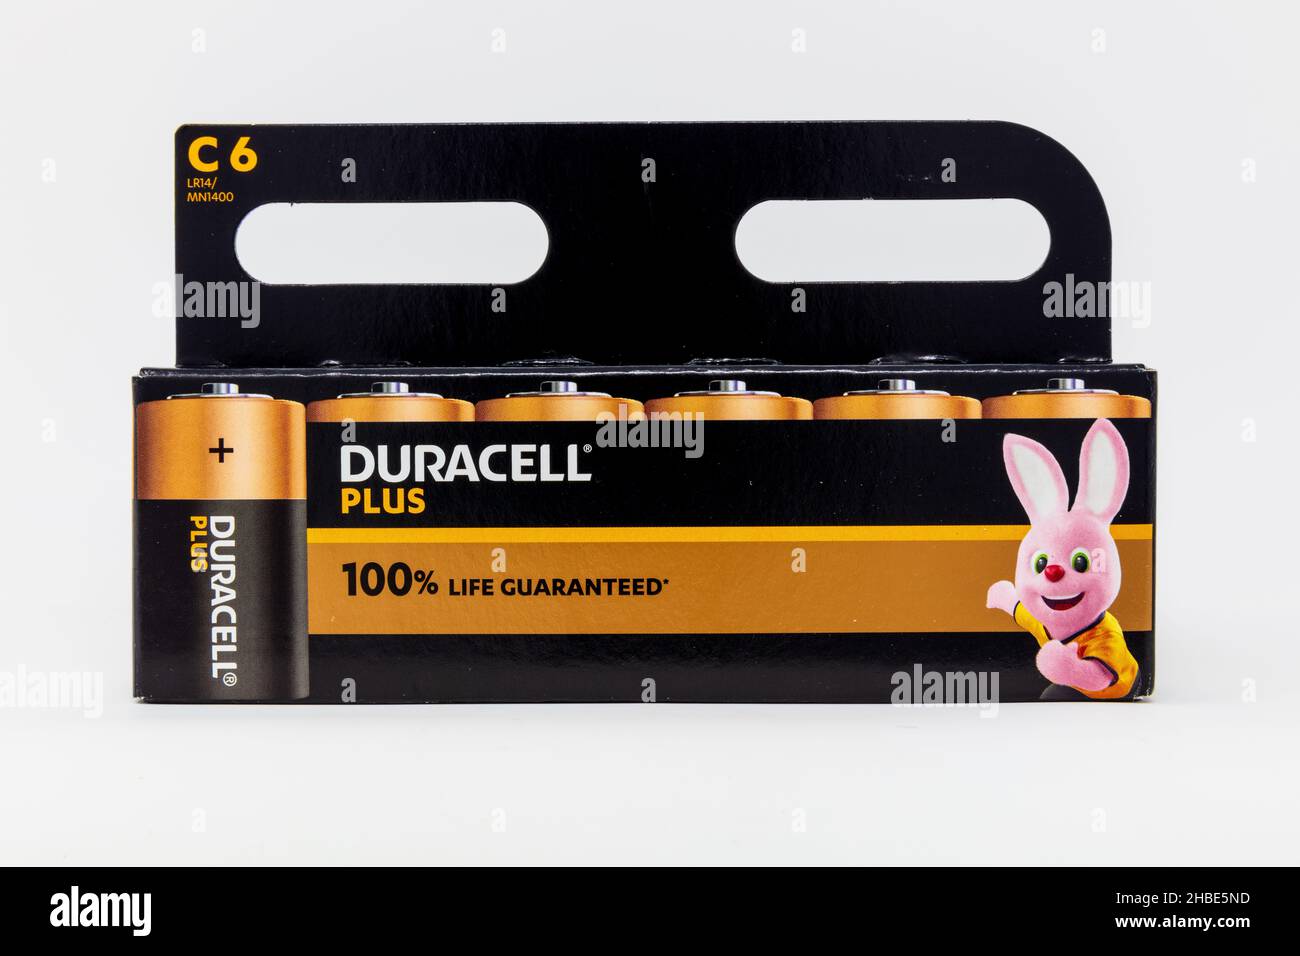 Duracell NEW Plus C Alkaline Batteries Stock Photo